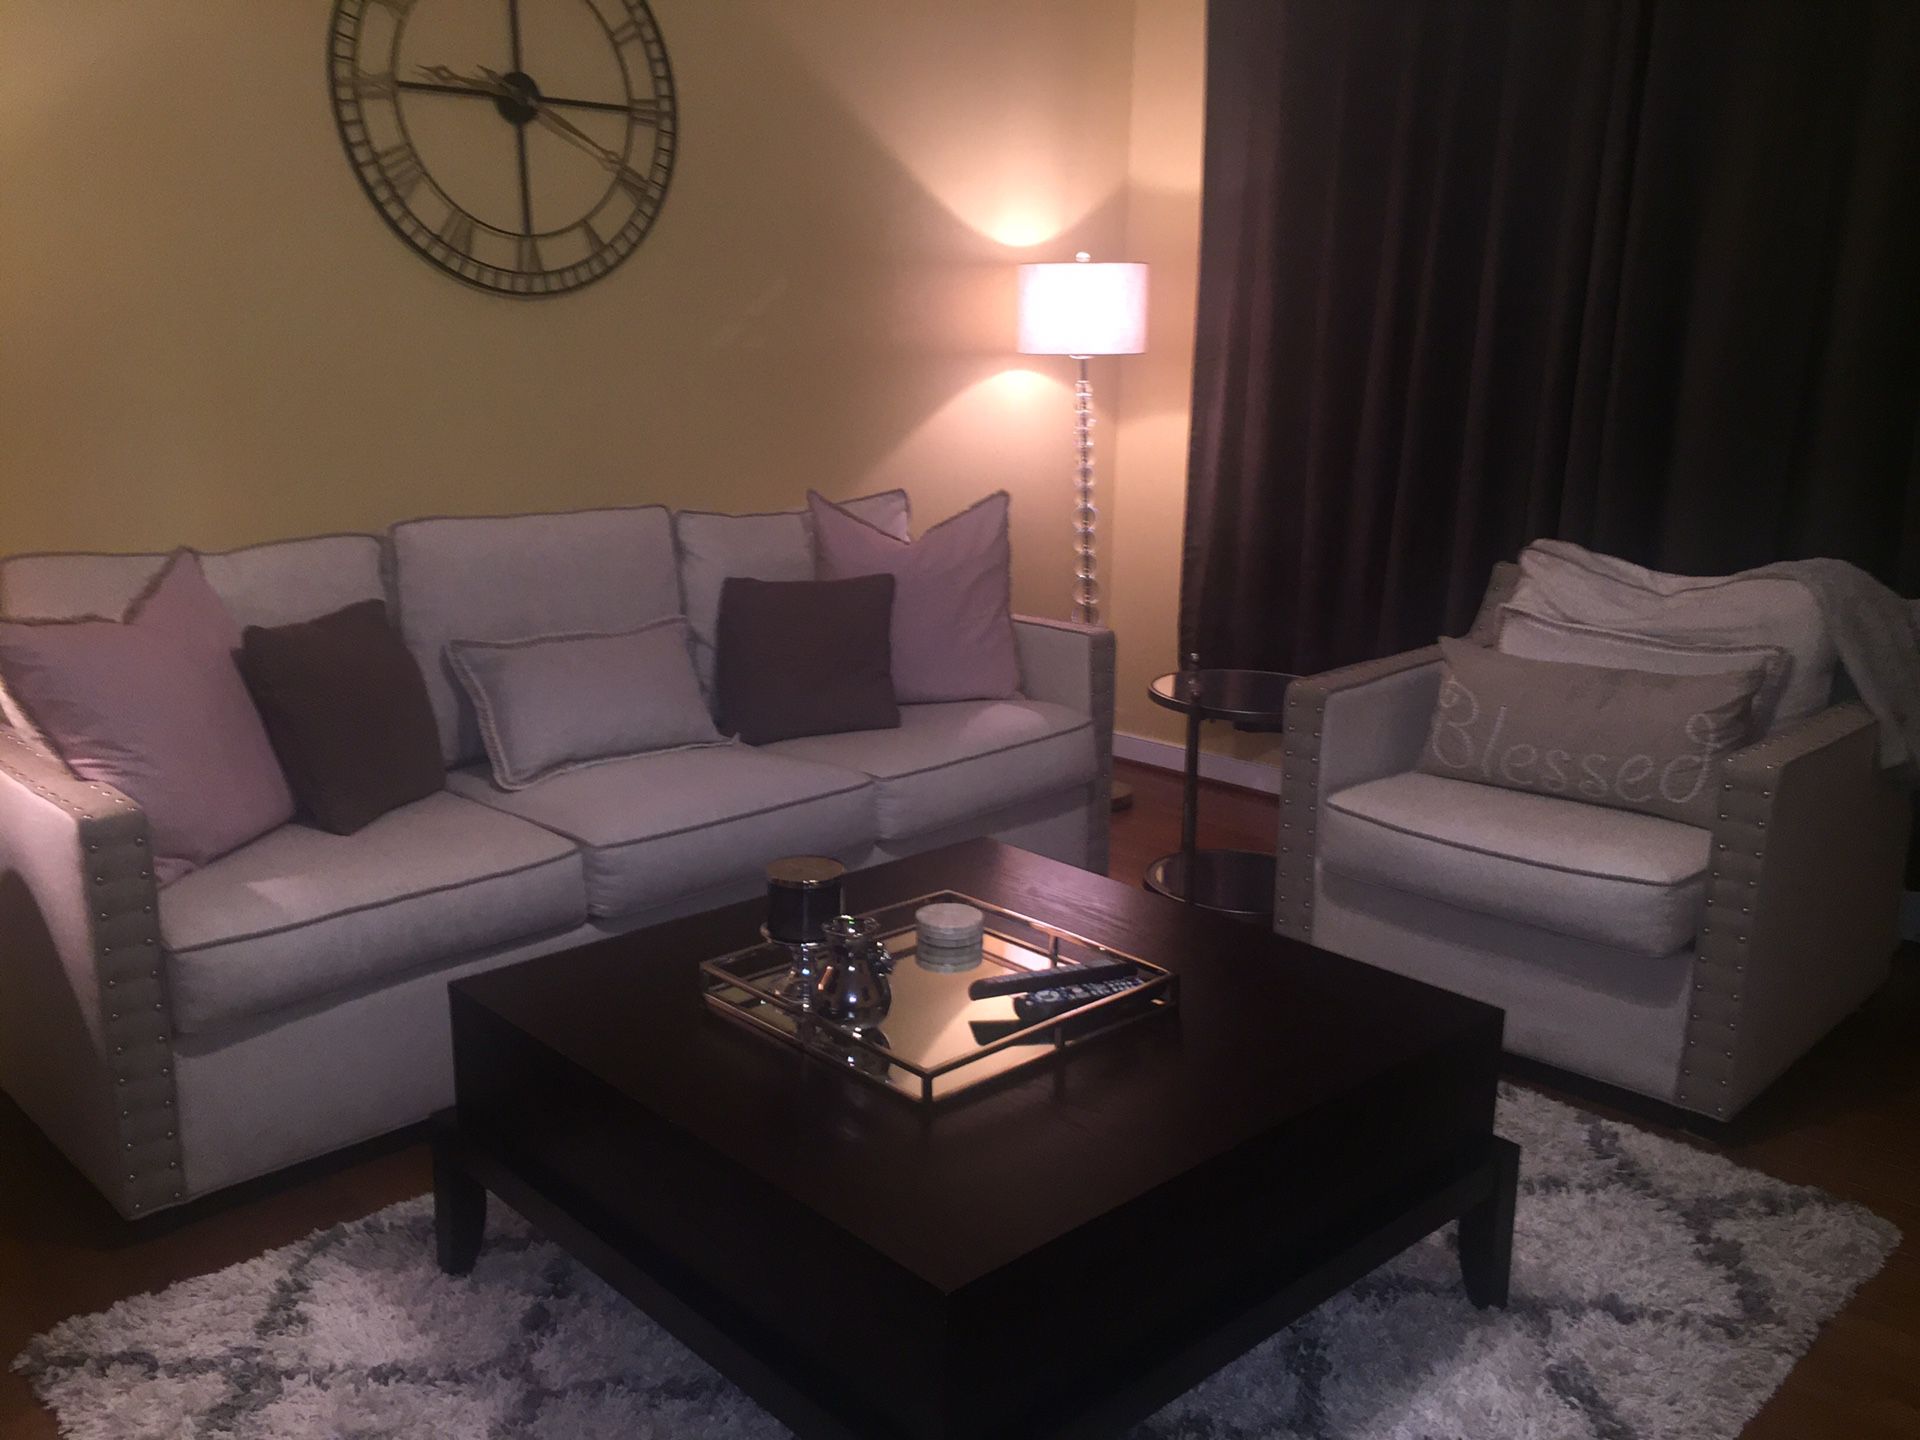 Hamilton’s couch set